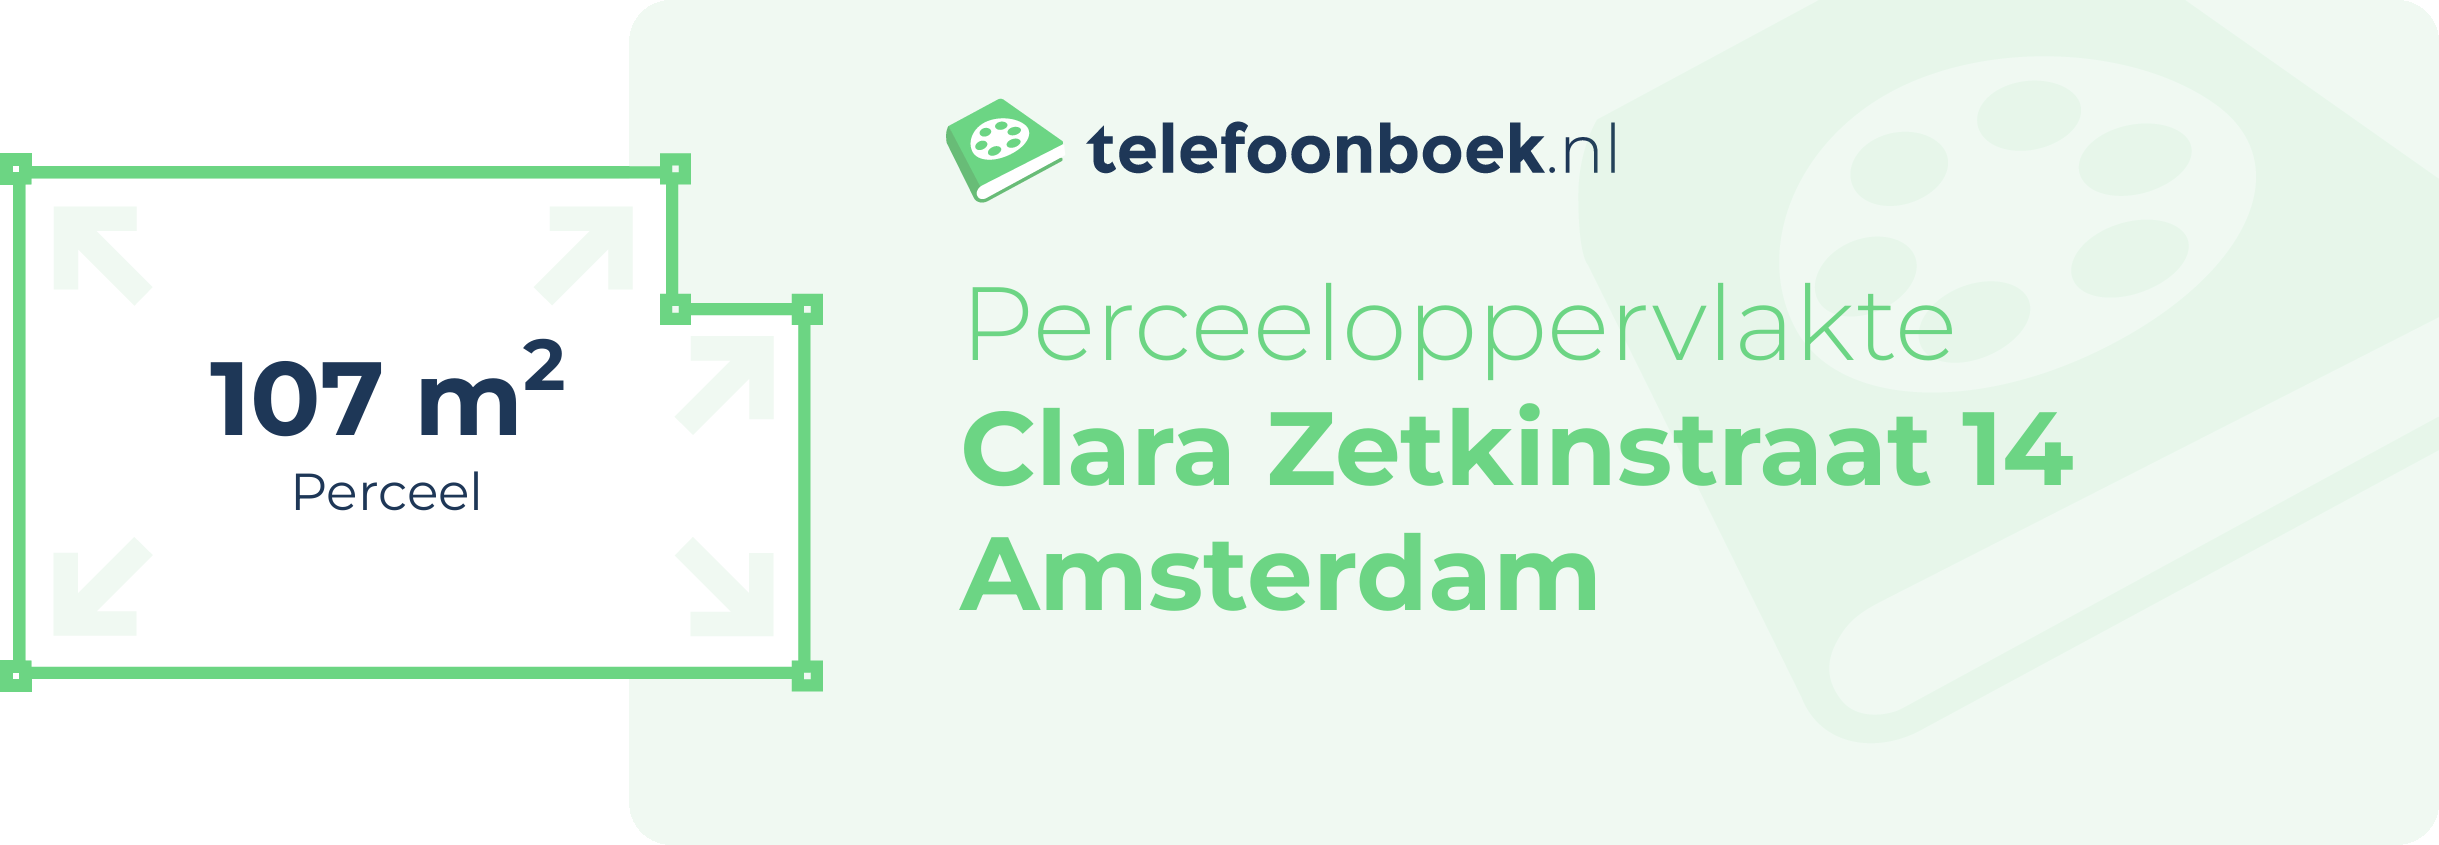 Perceeloppervlakte Clara Zetkinstraat 14 Amsterdam